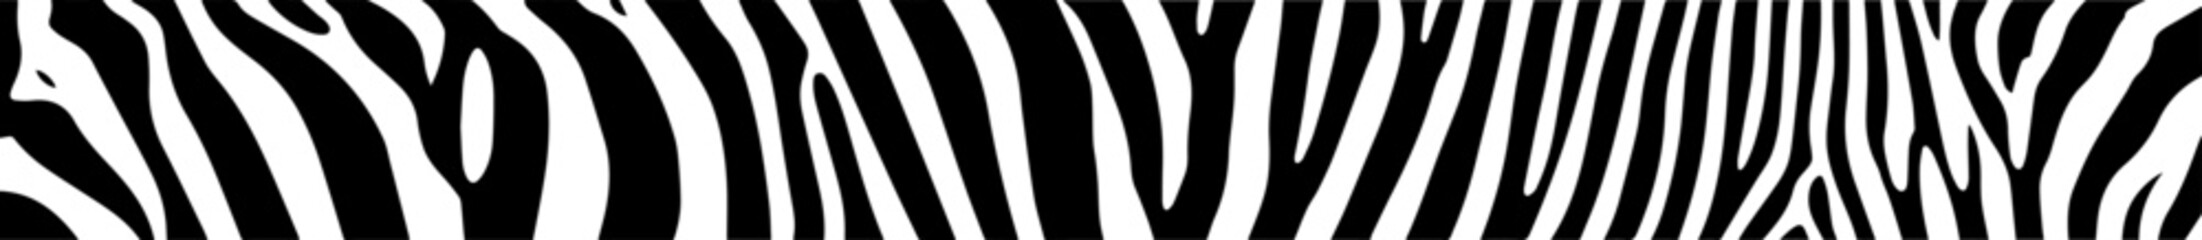 Poster - zebra stripes black pattern silhouette overlay vector, shape print, monochrome clipart illustration, laser cutting engraving nocolor